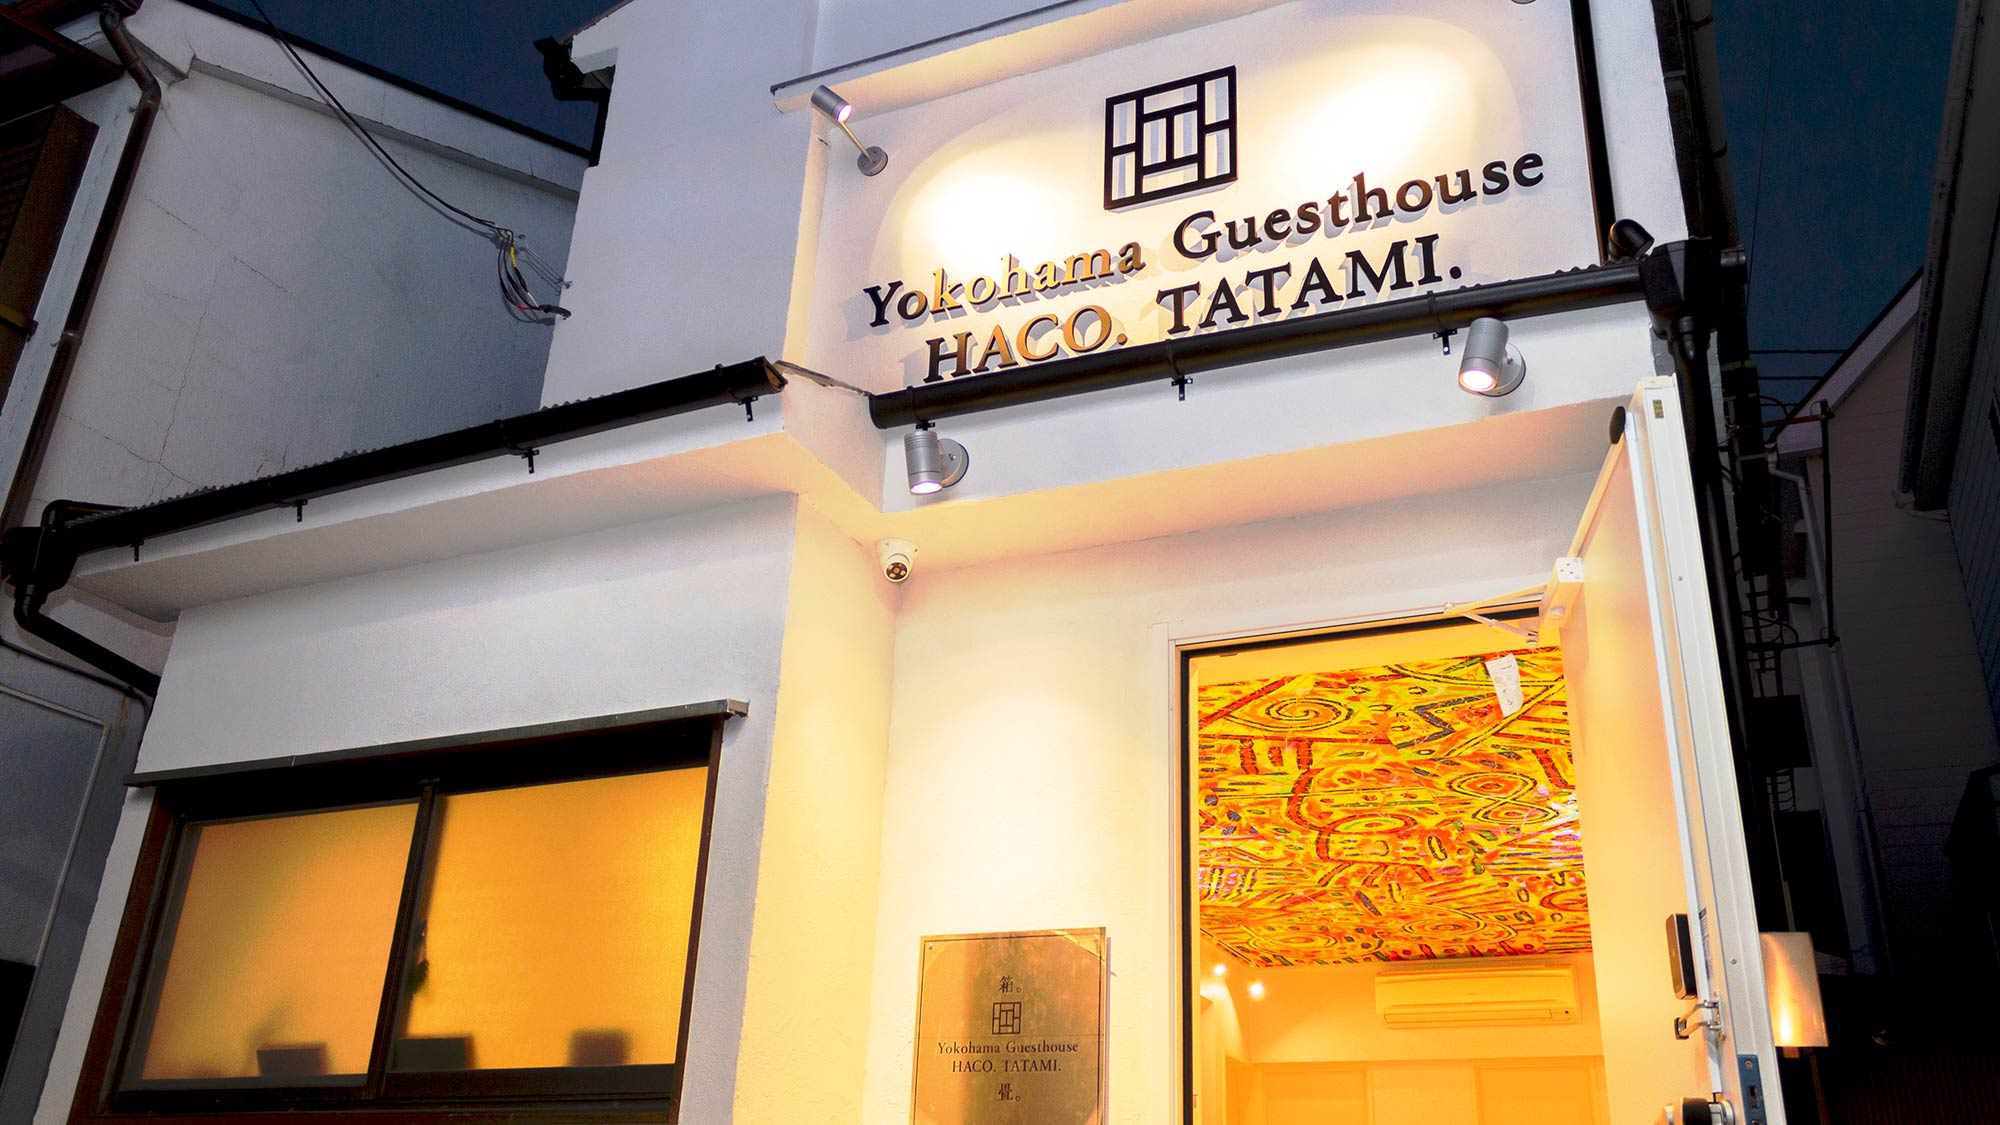 Yokohama Guesthouse Haco. Tatami.